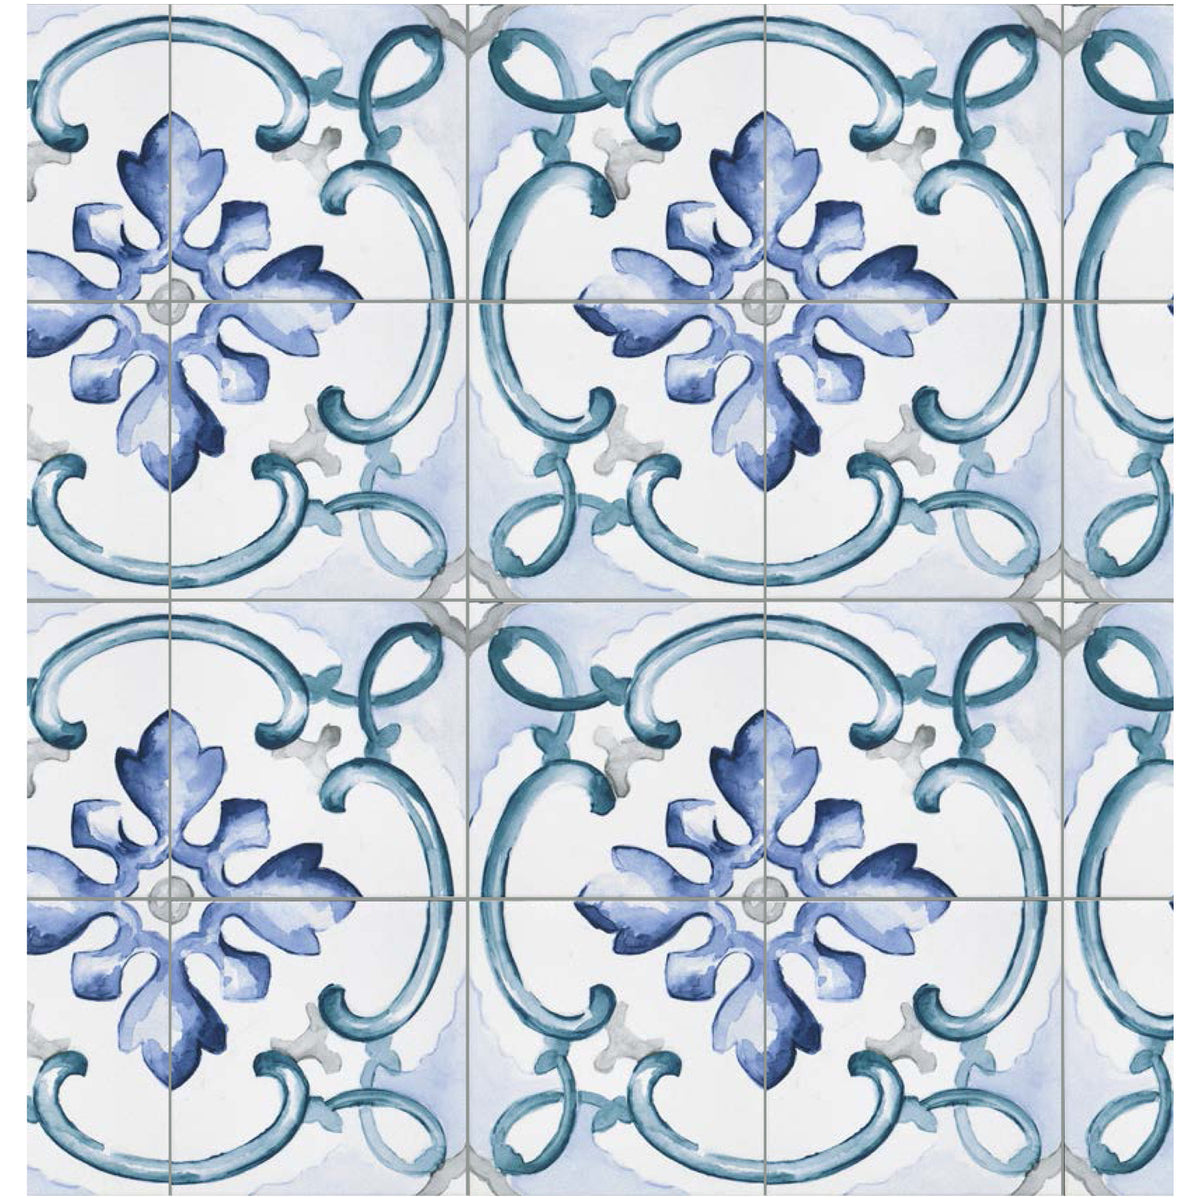 Topcu - Saint Germain 6 in. x 6 in. Glazed Porcelain Tile  - Jules Gele Installed